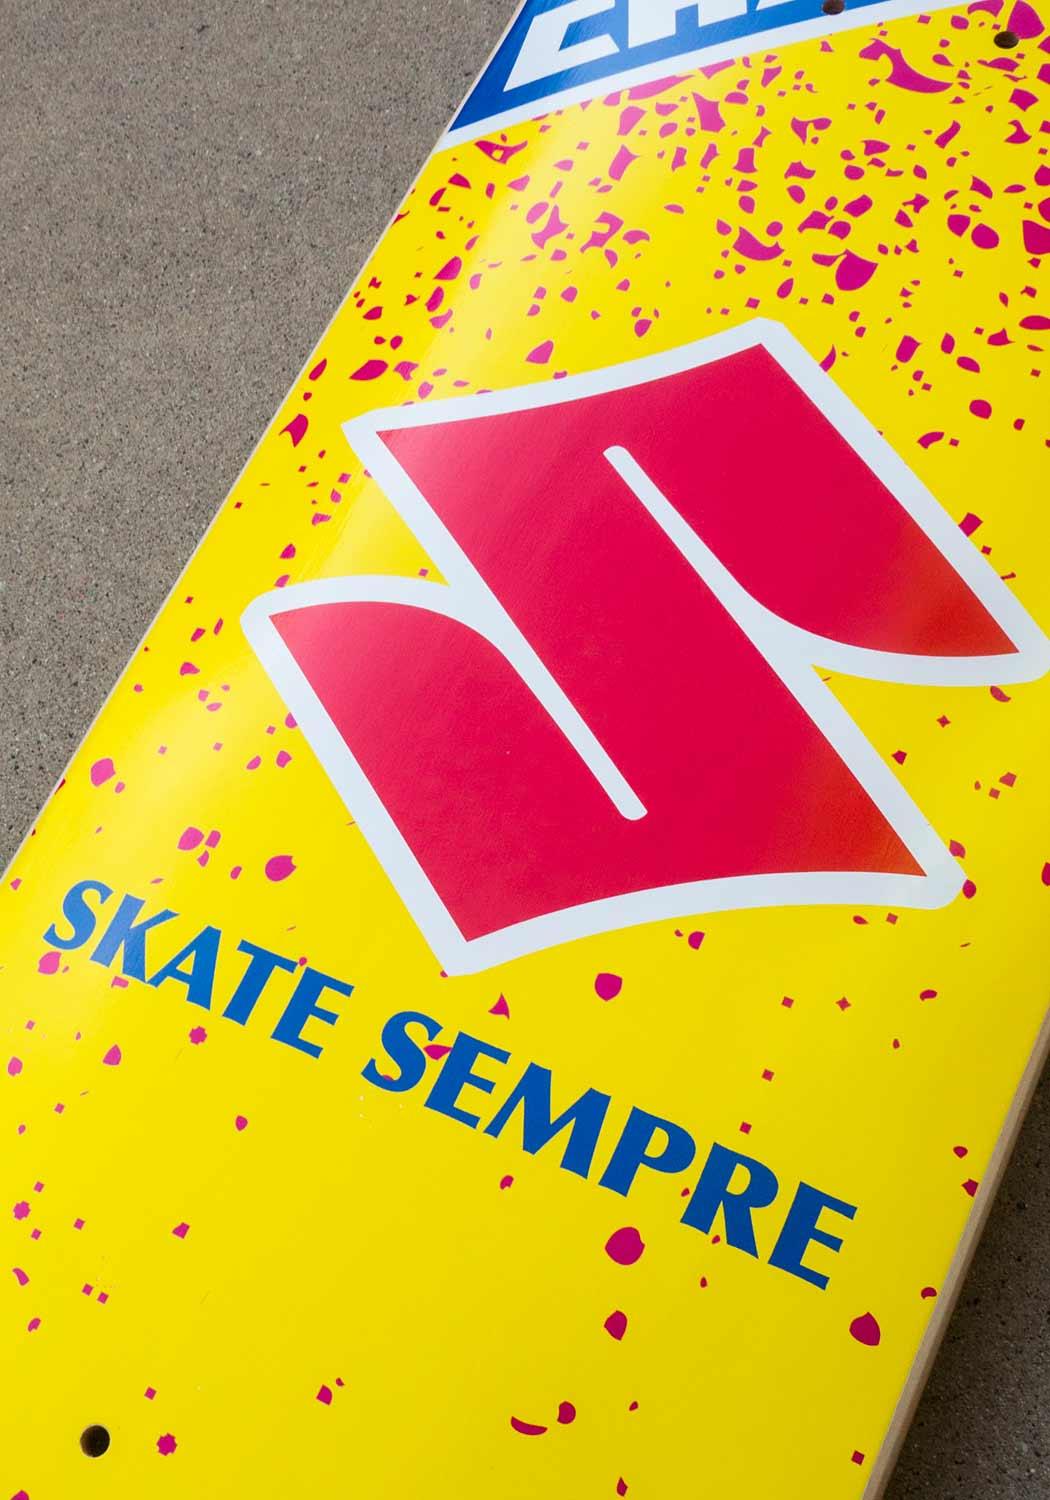 Shape Maple Race Team J.N. 8.1" - Future Skateboards